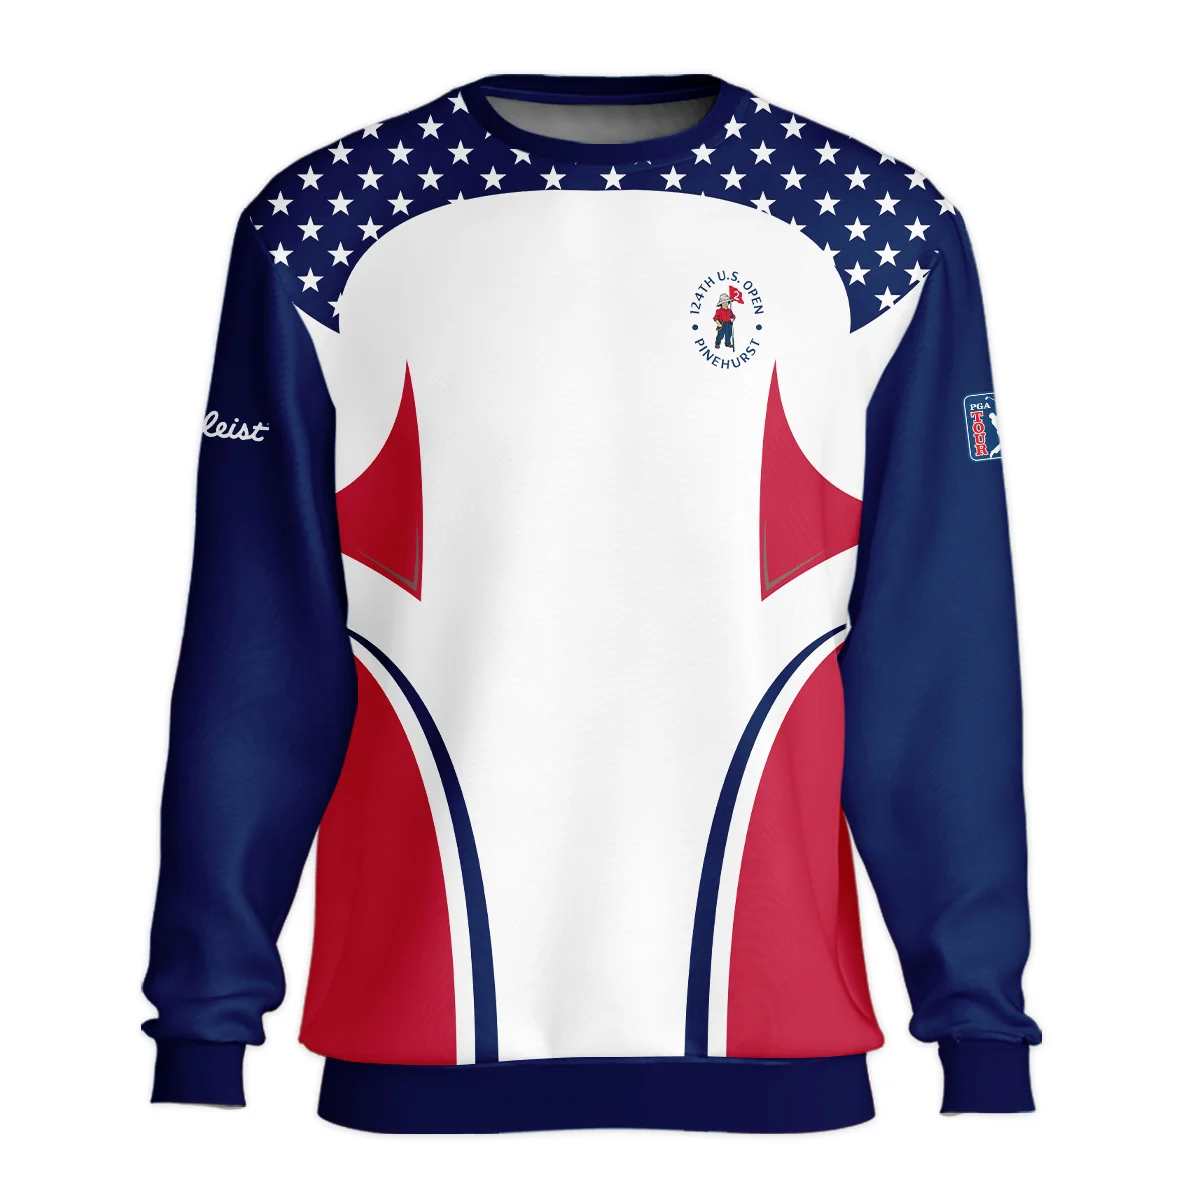 124th U.S. Open Pinehurst Titleist Stars White Dark Blue Red Line Polo Shirt Style Classic Polo Shirt For Men